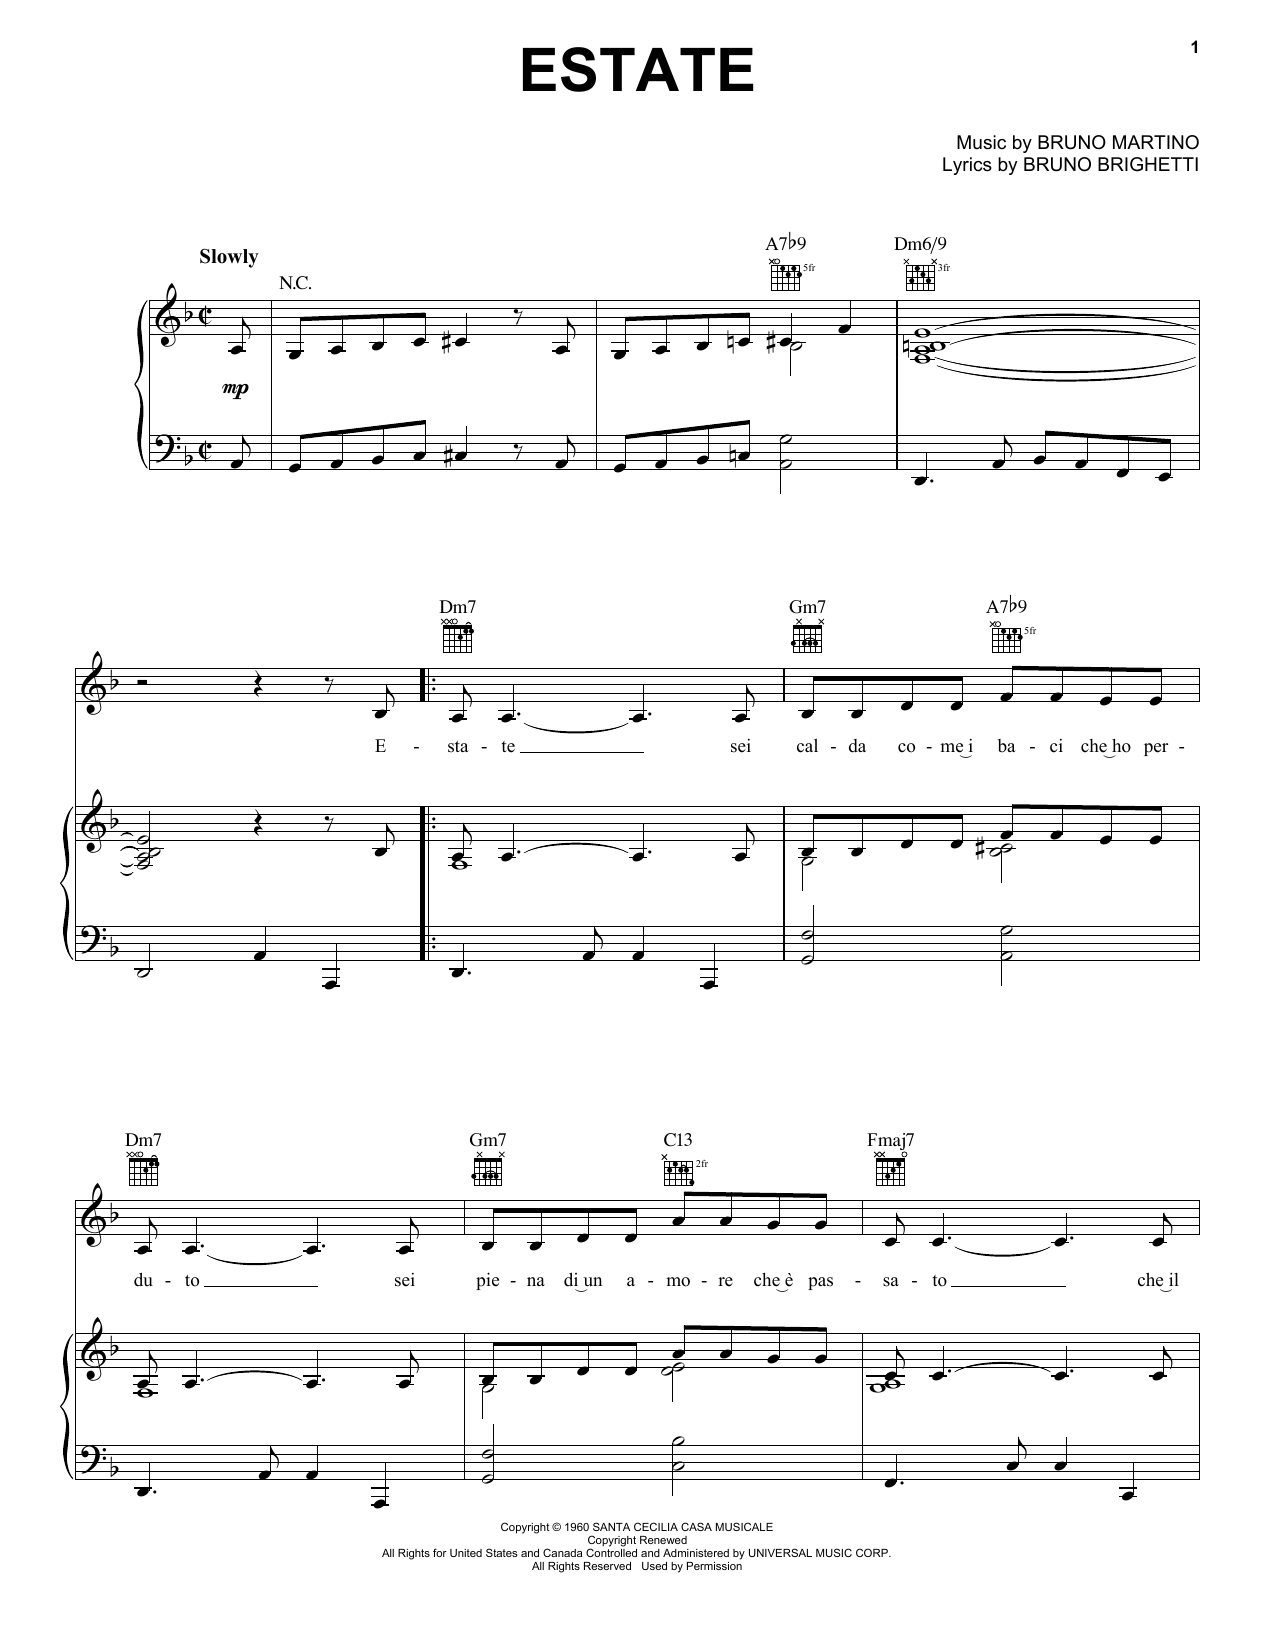 Bruno Martino Estate Sheet Music Notes & Chords for Guitar Tab - Download or Print PDF